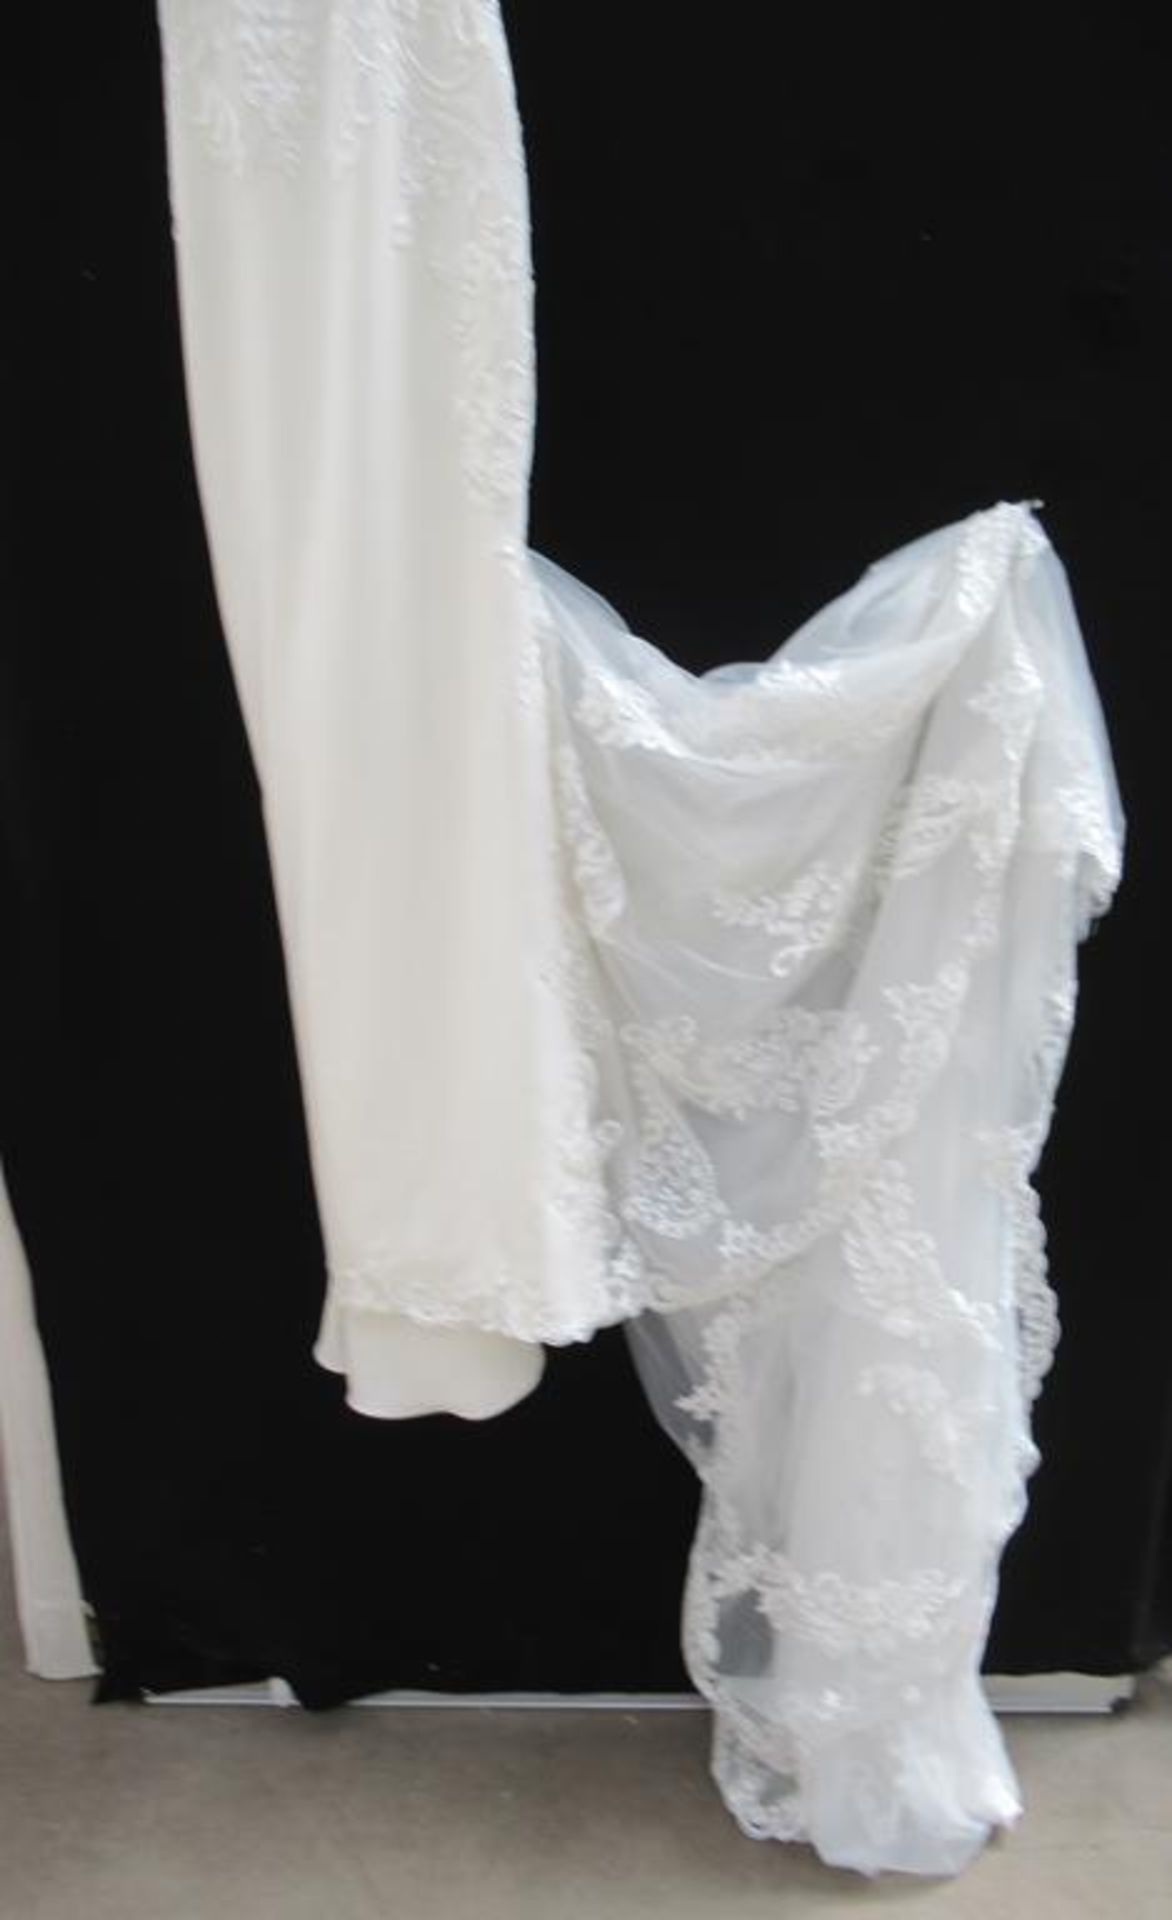 Essense of Australia 'D2835' wedding dress - Image 3 of 3